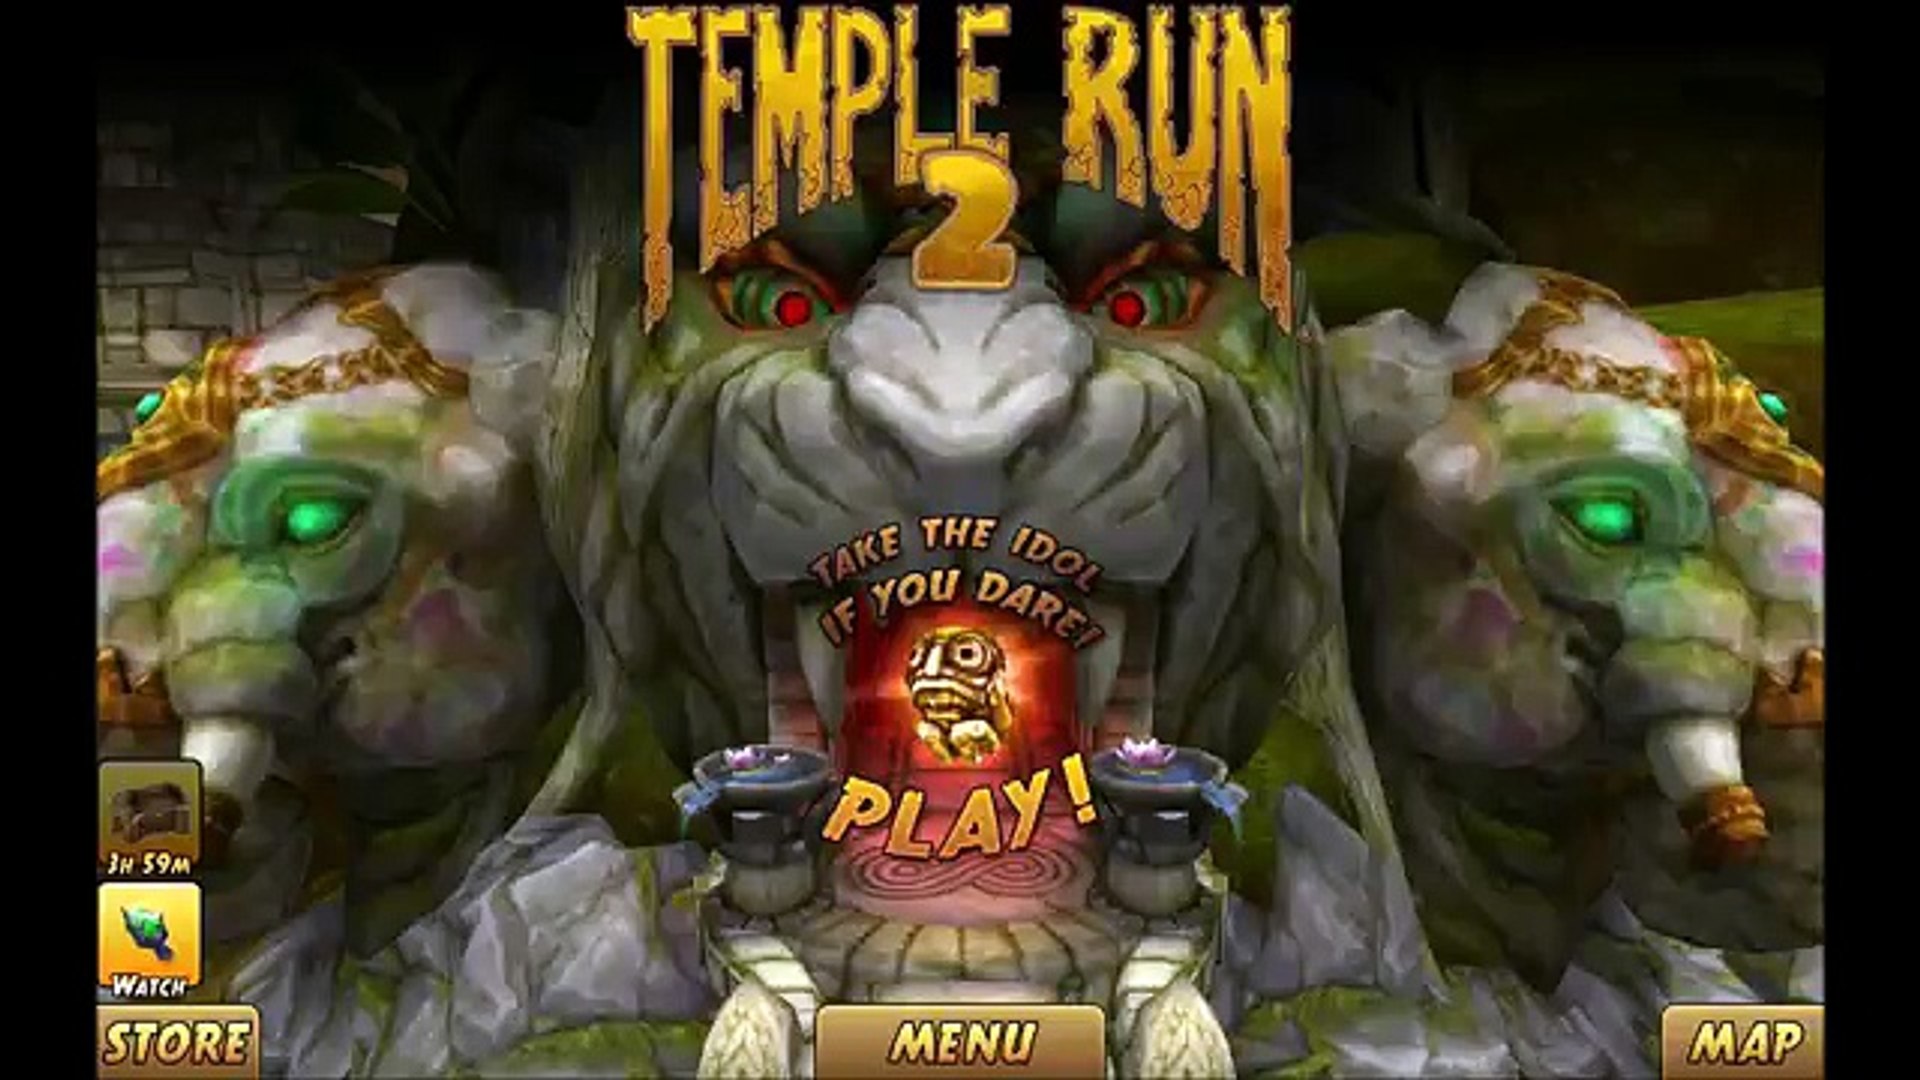 TEMPLE RUN 2 LOST JUNGLE Gameplay HD #2 